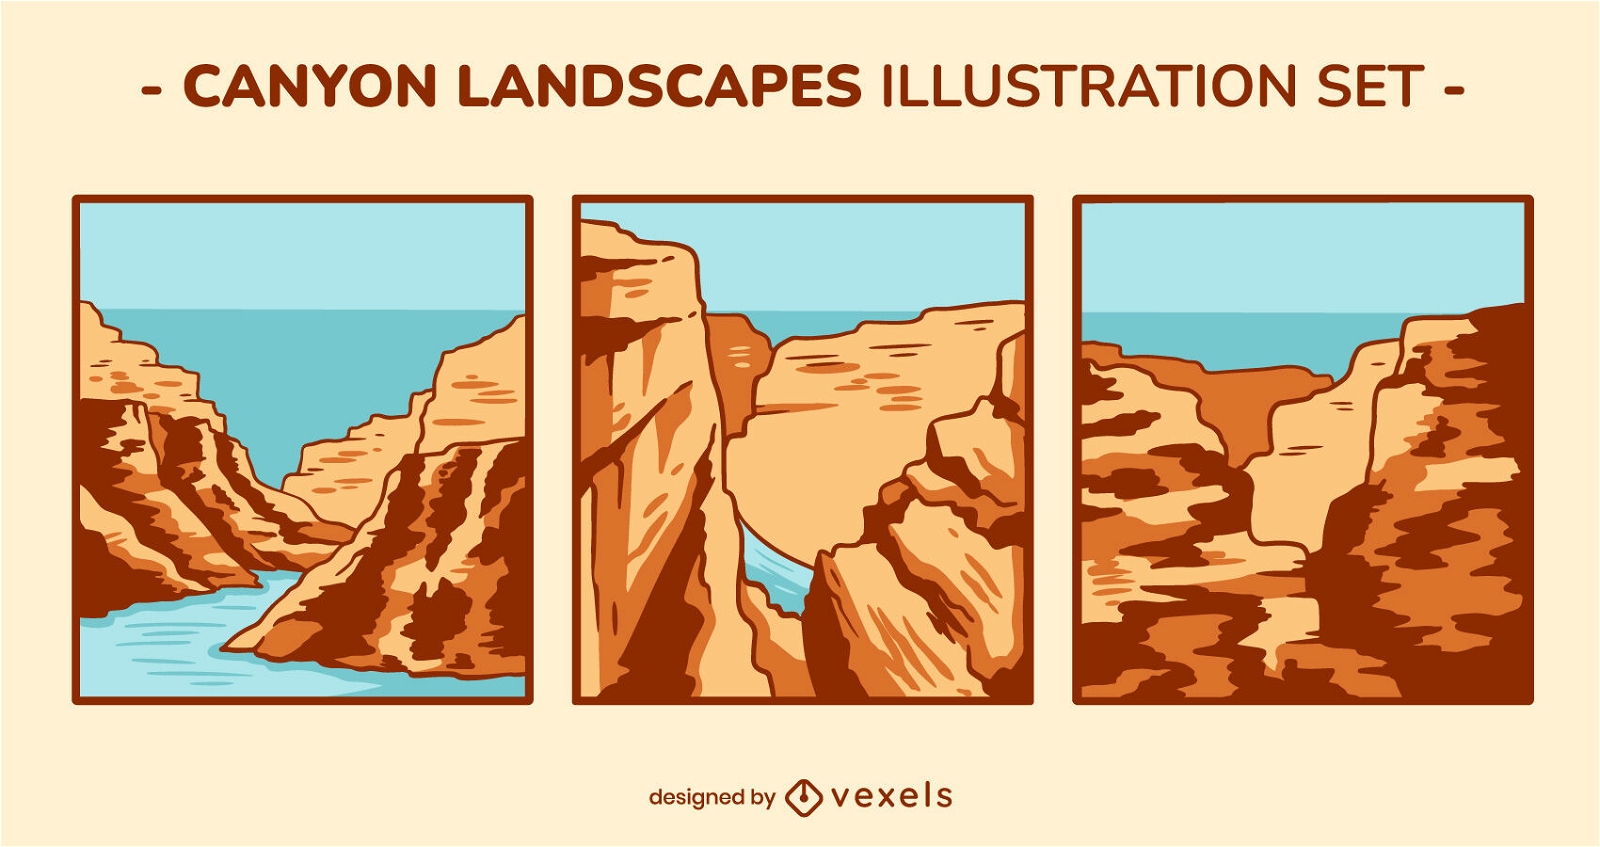 Canyon landscapes illustration set